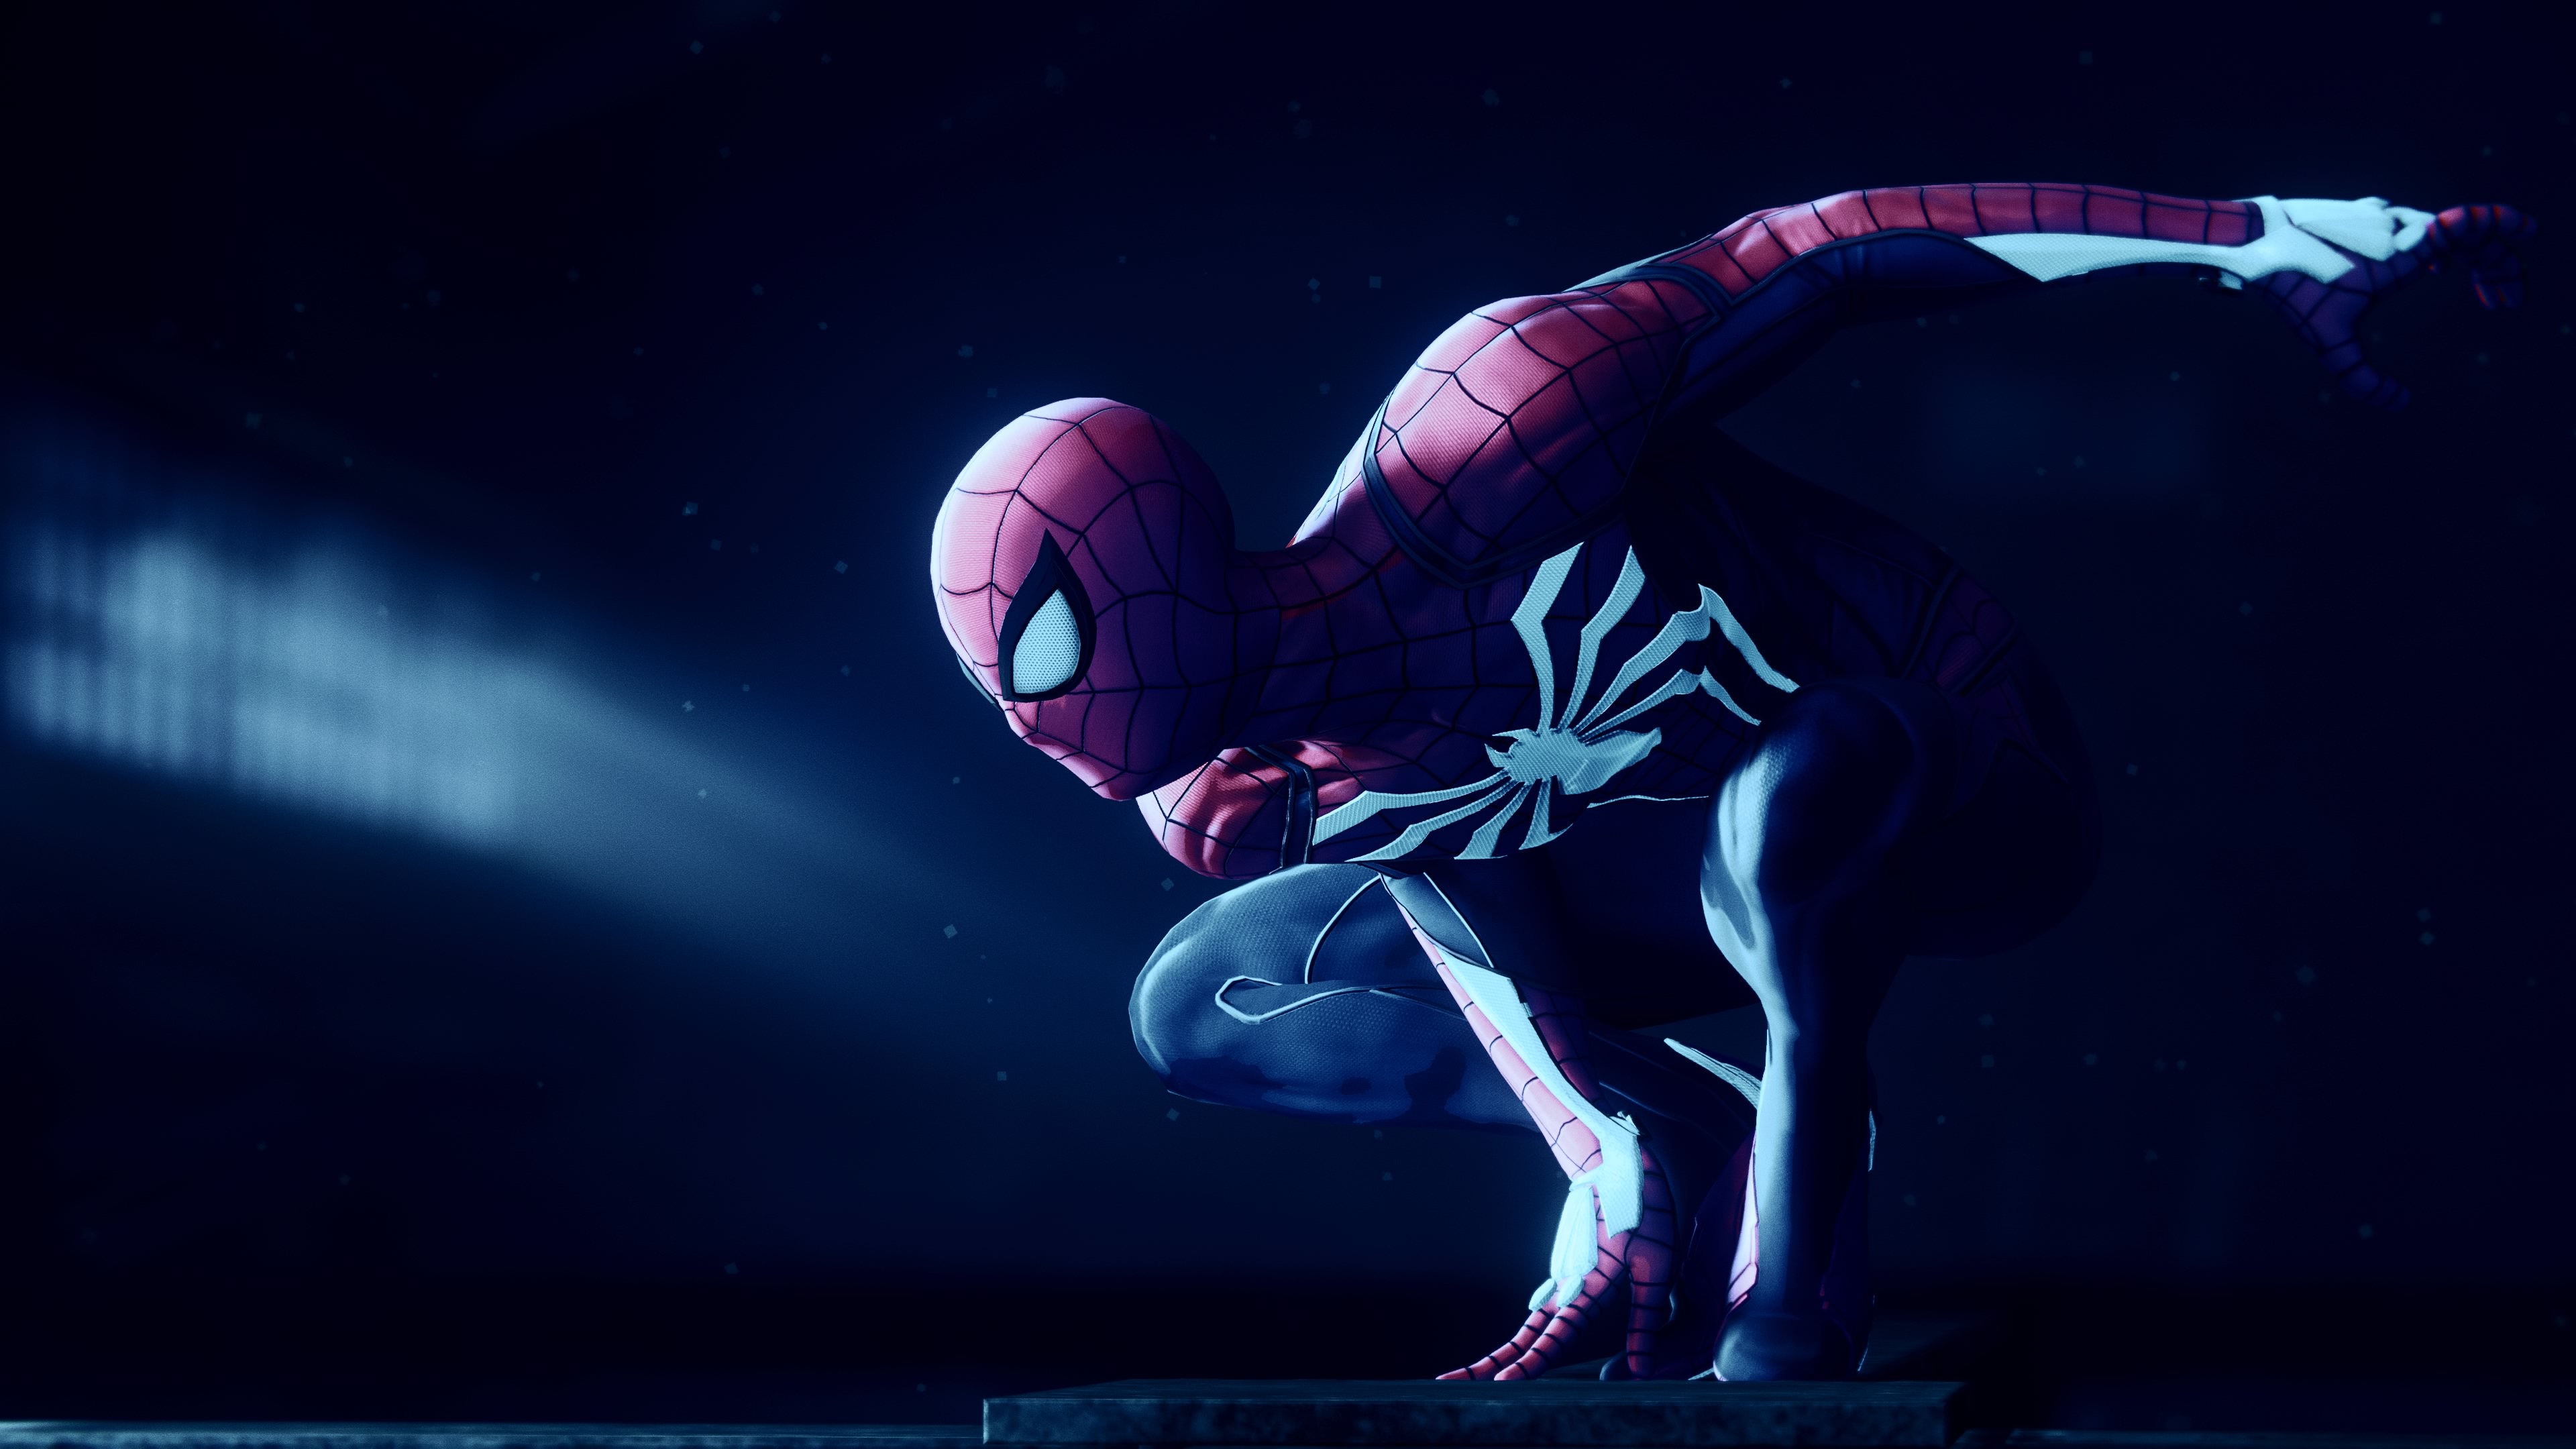 Marvel Spiderman Game 4k, HD Games, 4k Wallpapers, Images ...